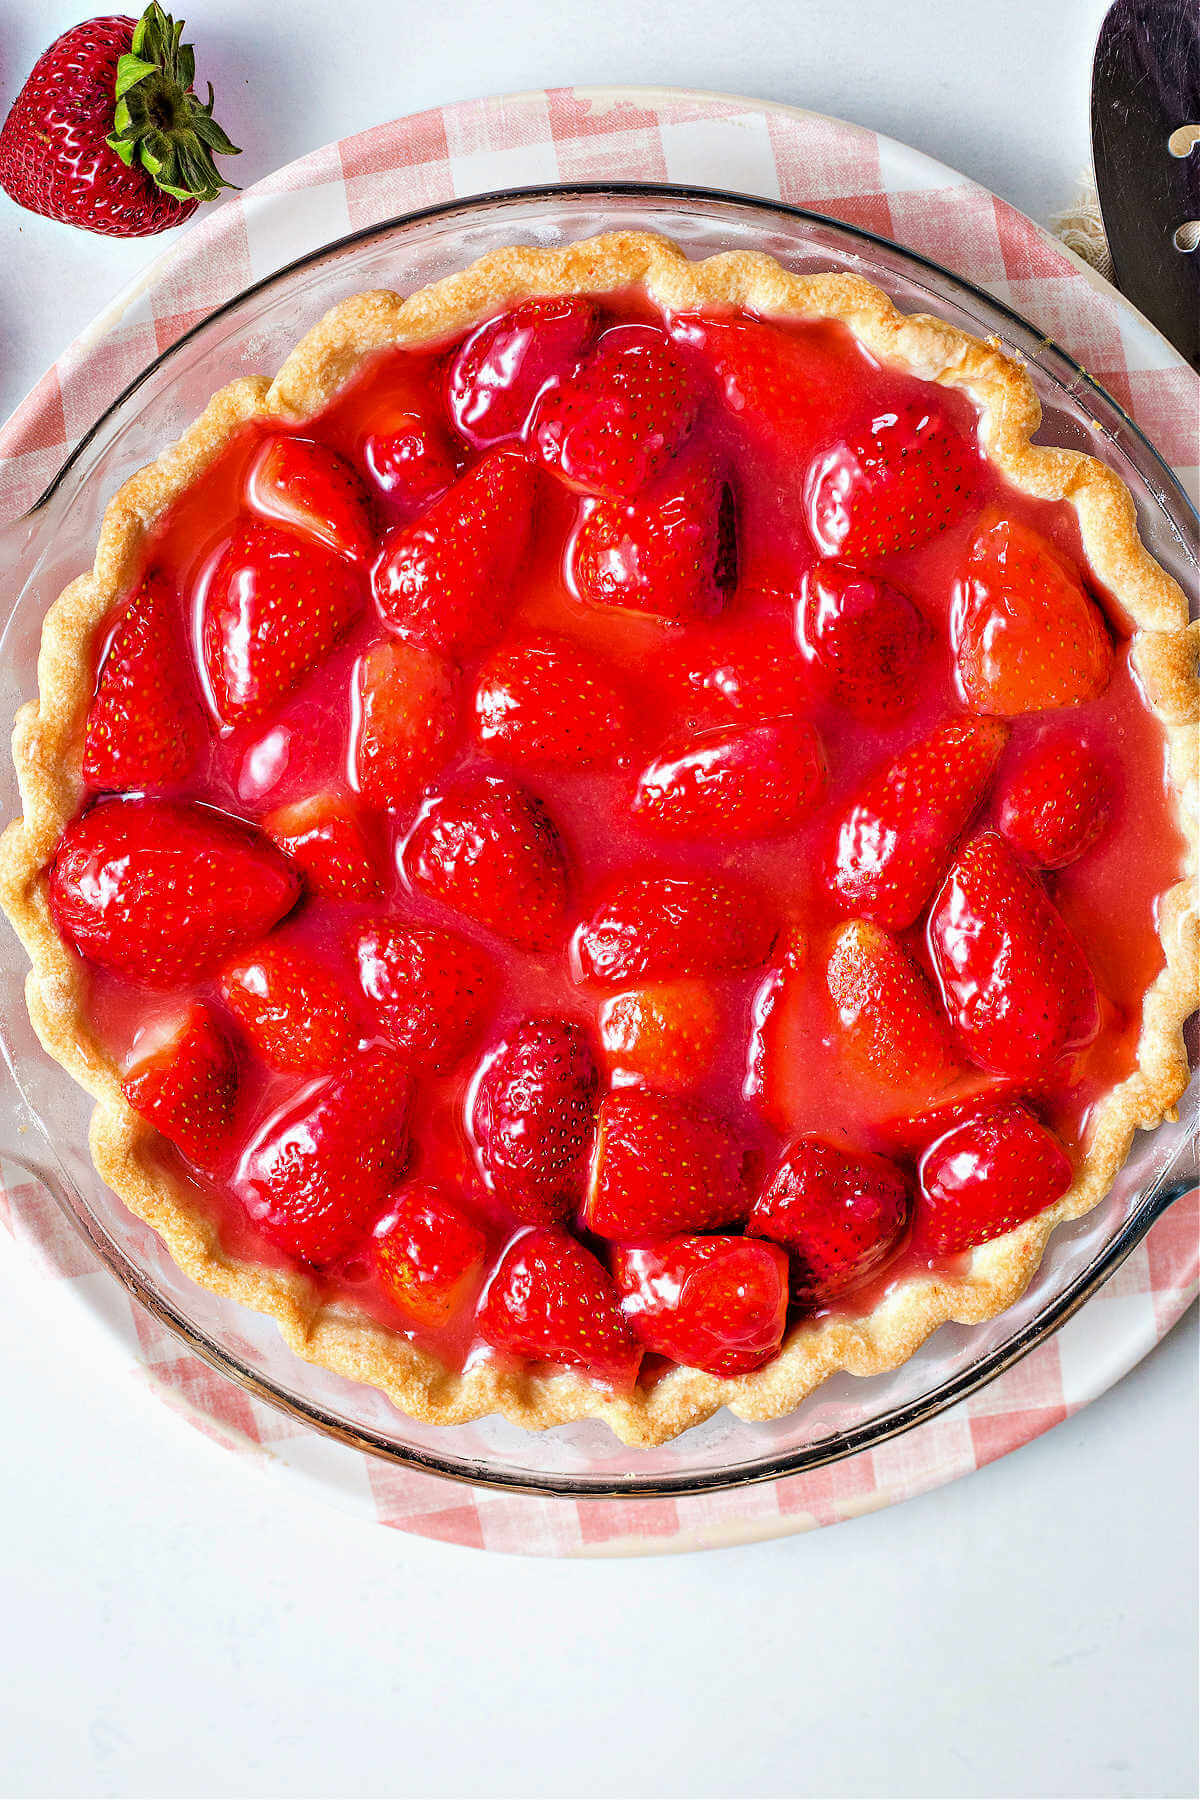 a fresh strawberry pie sitting on a decorative plate.